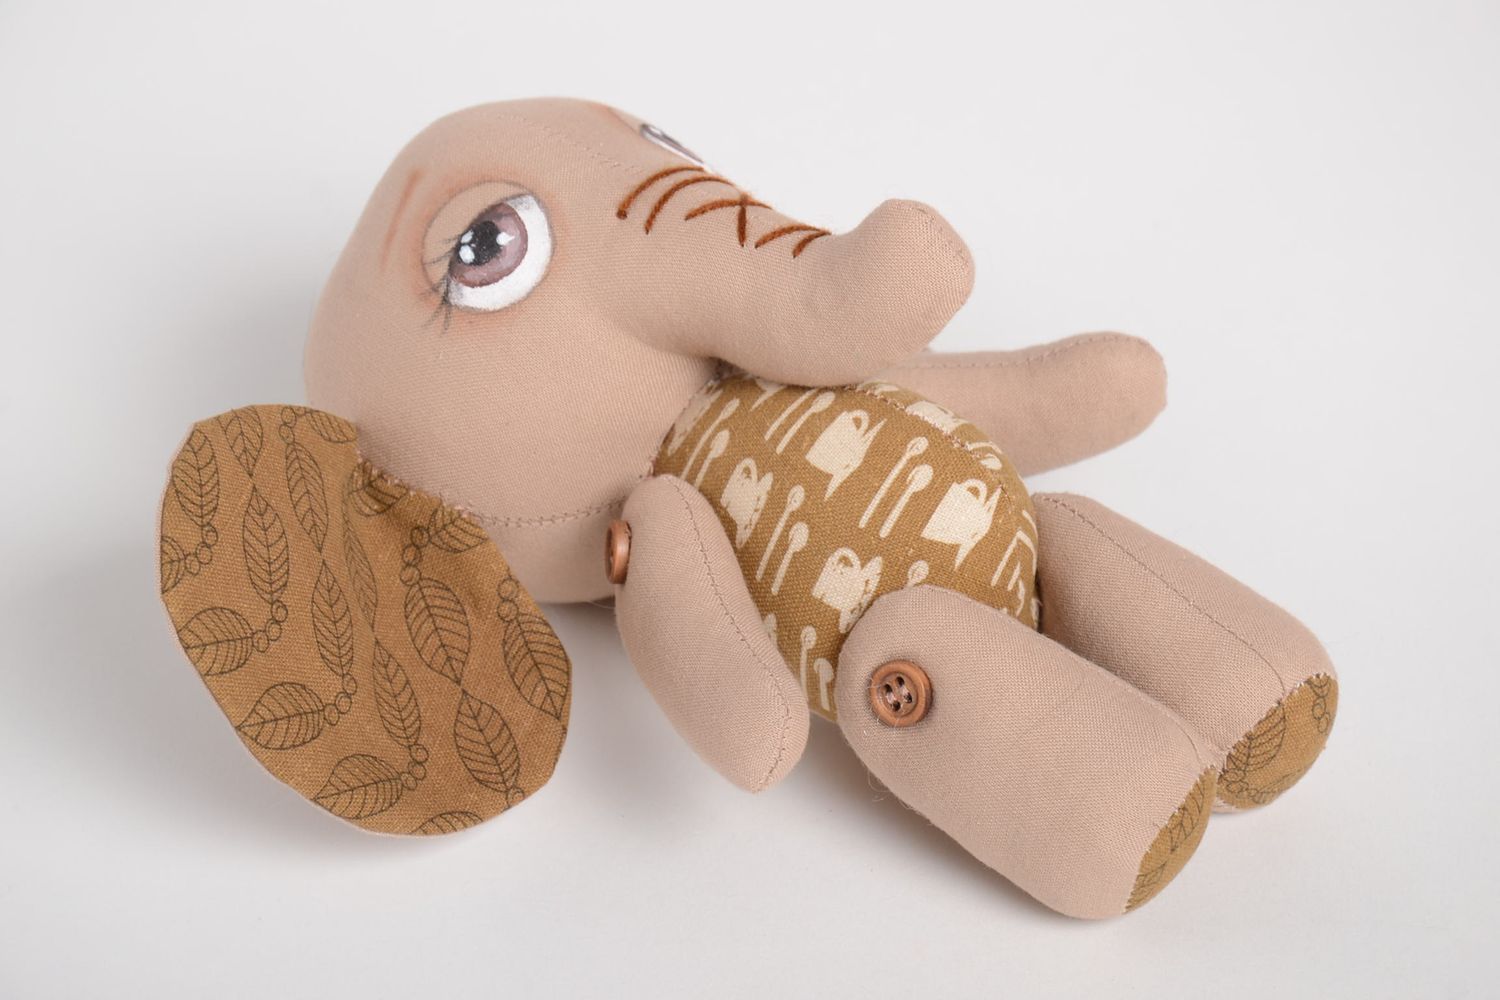 Handmade stuffed toy elephant soft doll for children interior decor ideas photo 5